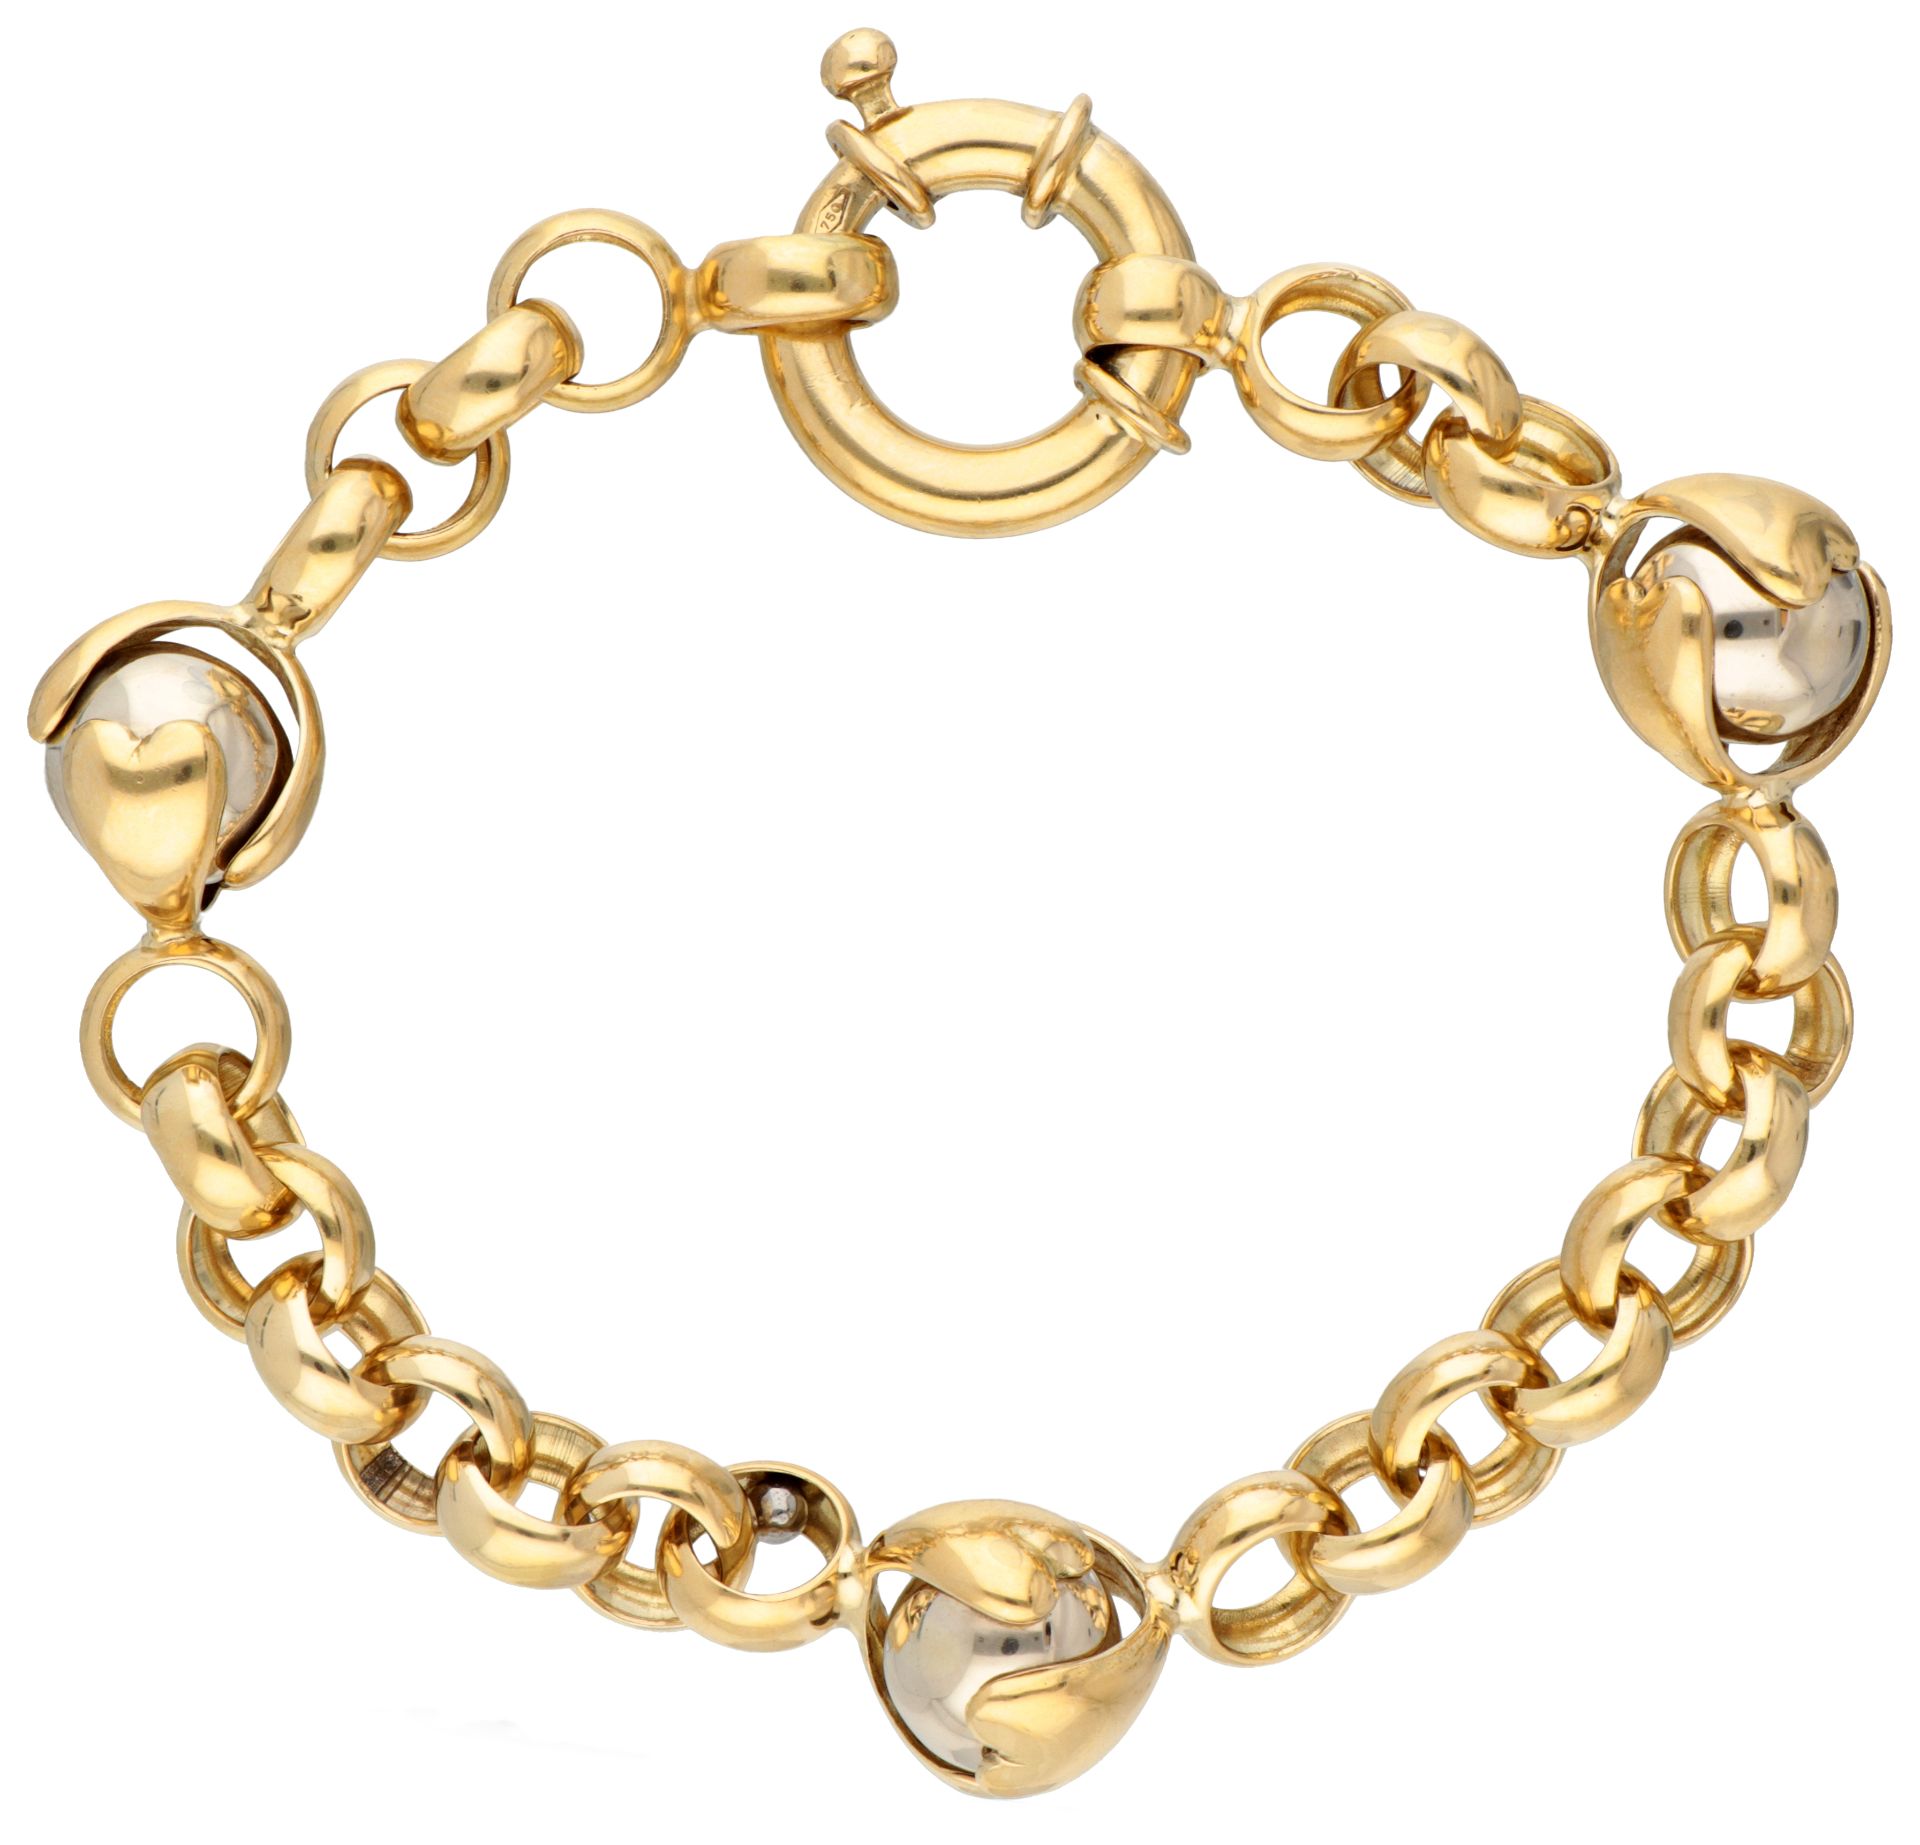 Italian 18K yellow gold anchor link bracelet.